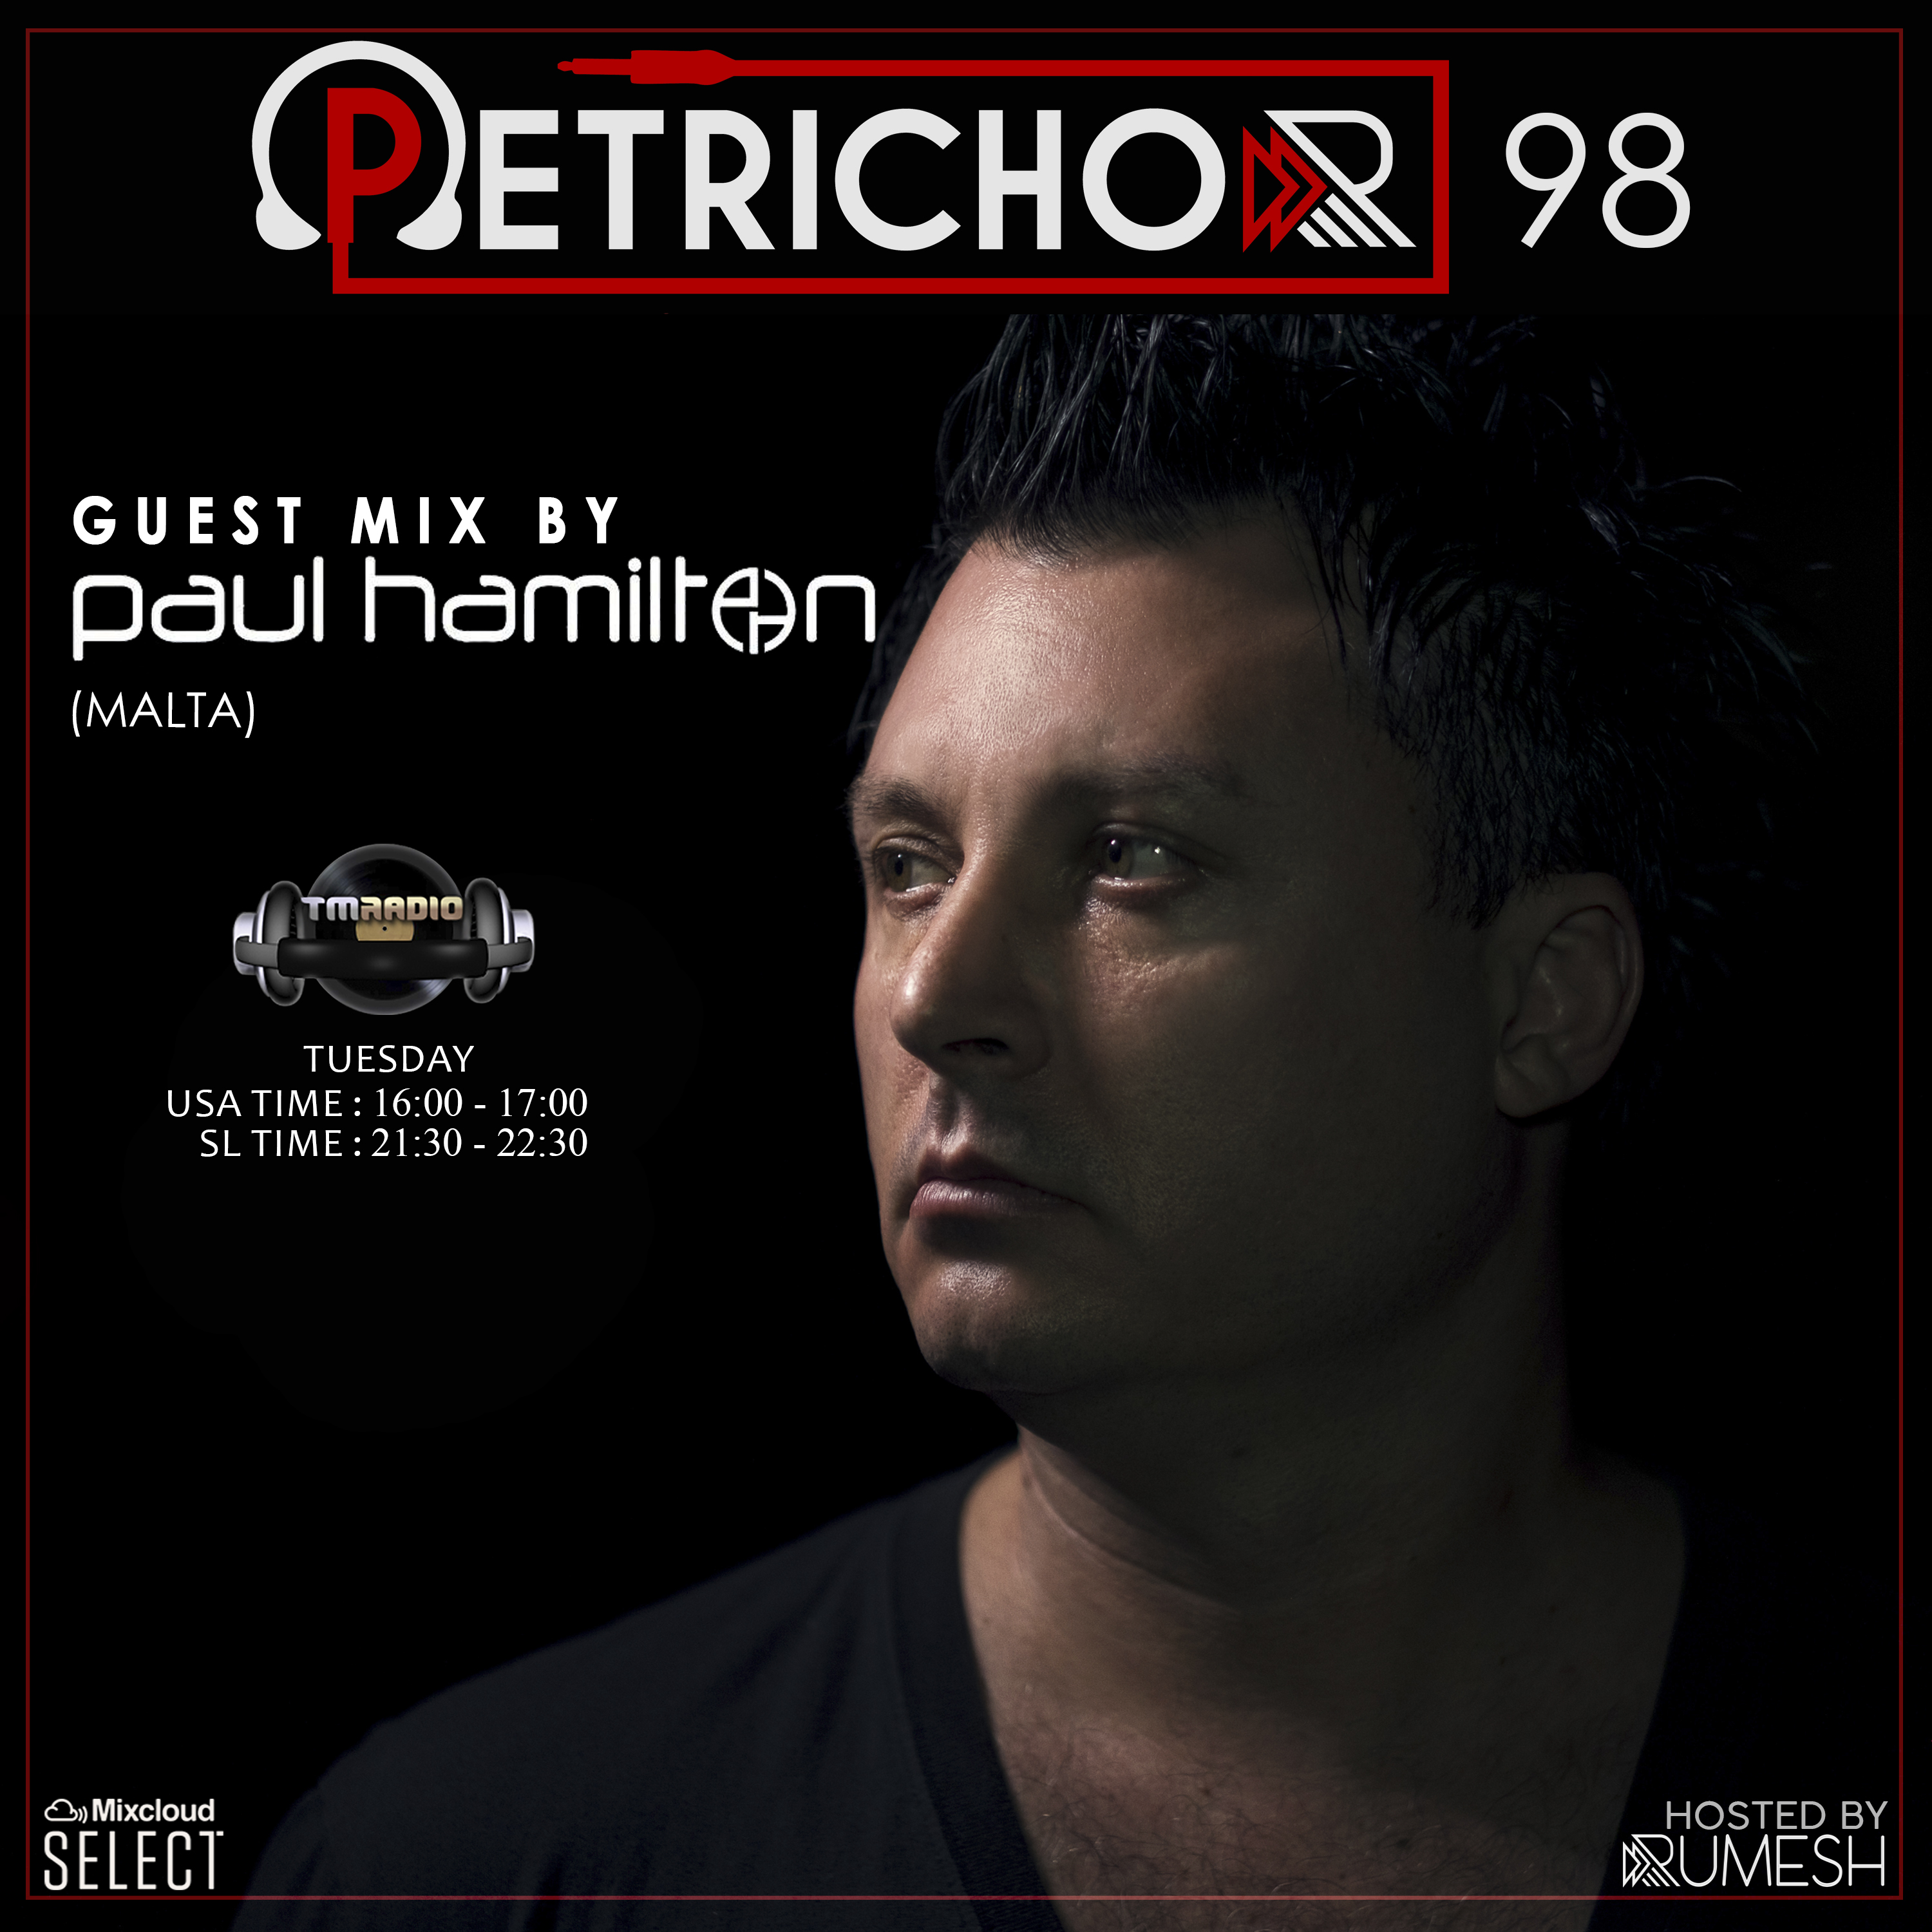 Petrichor :: Petrichor 98 guest mix by Paul Hamilton (Malta) (aired on January 19th, 2021) banner logo